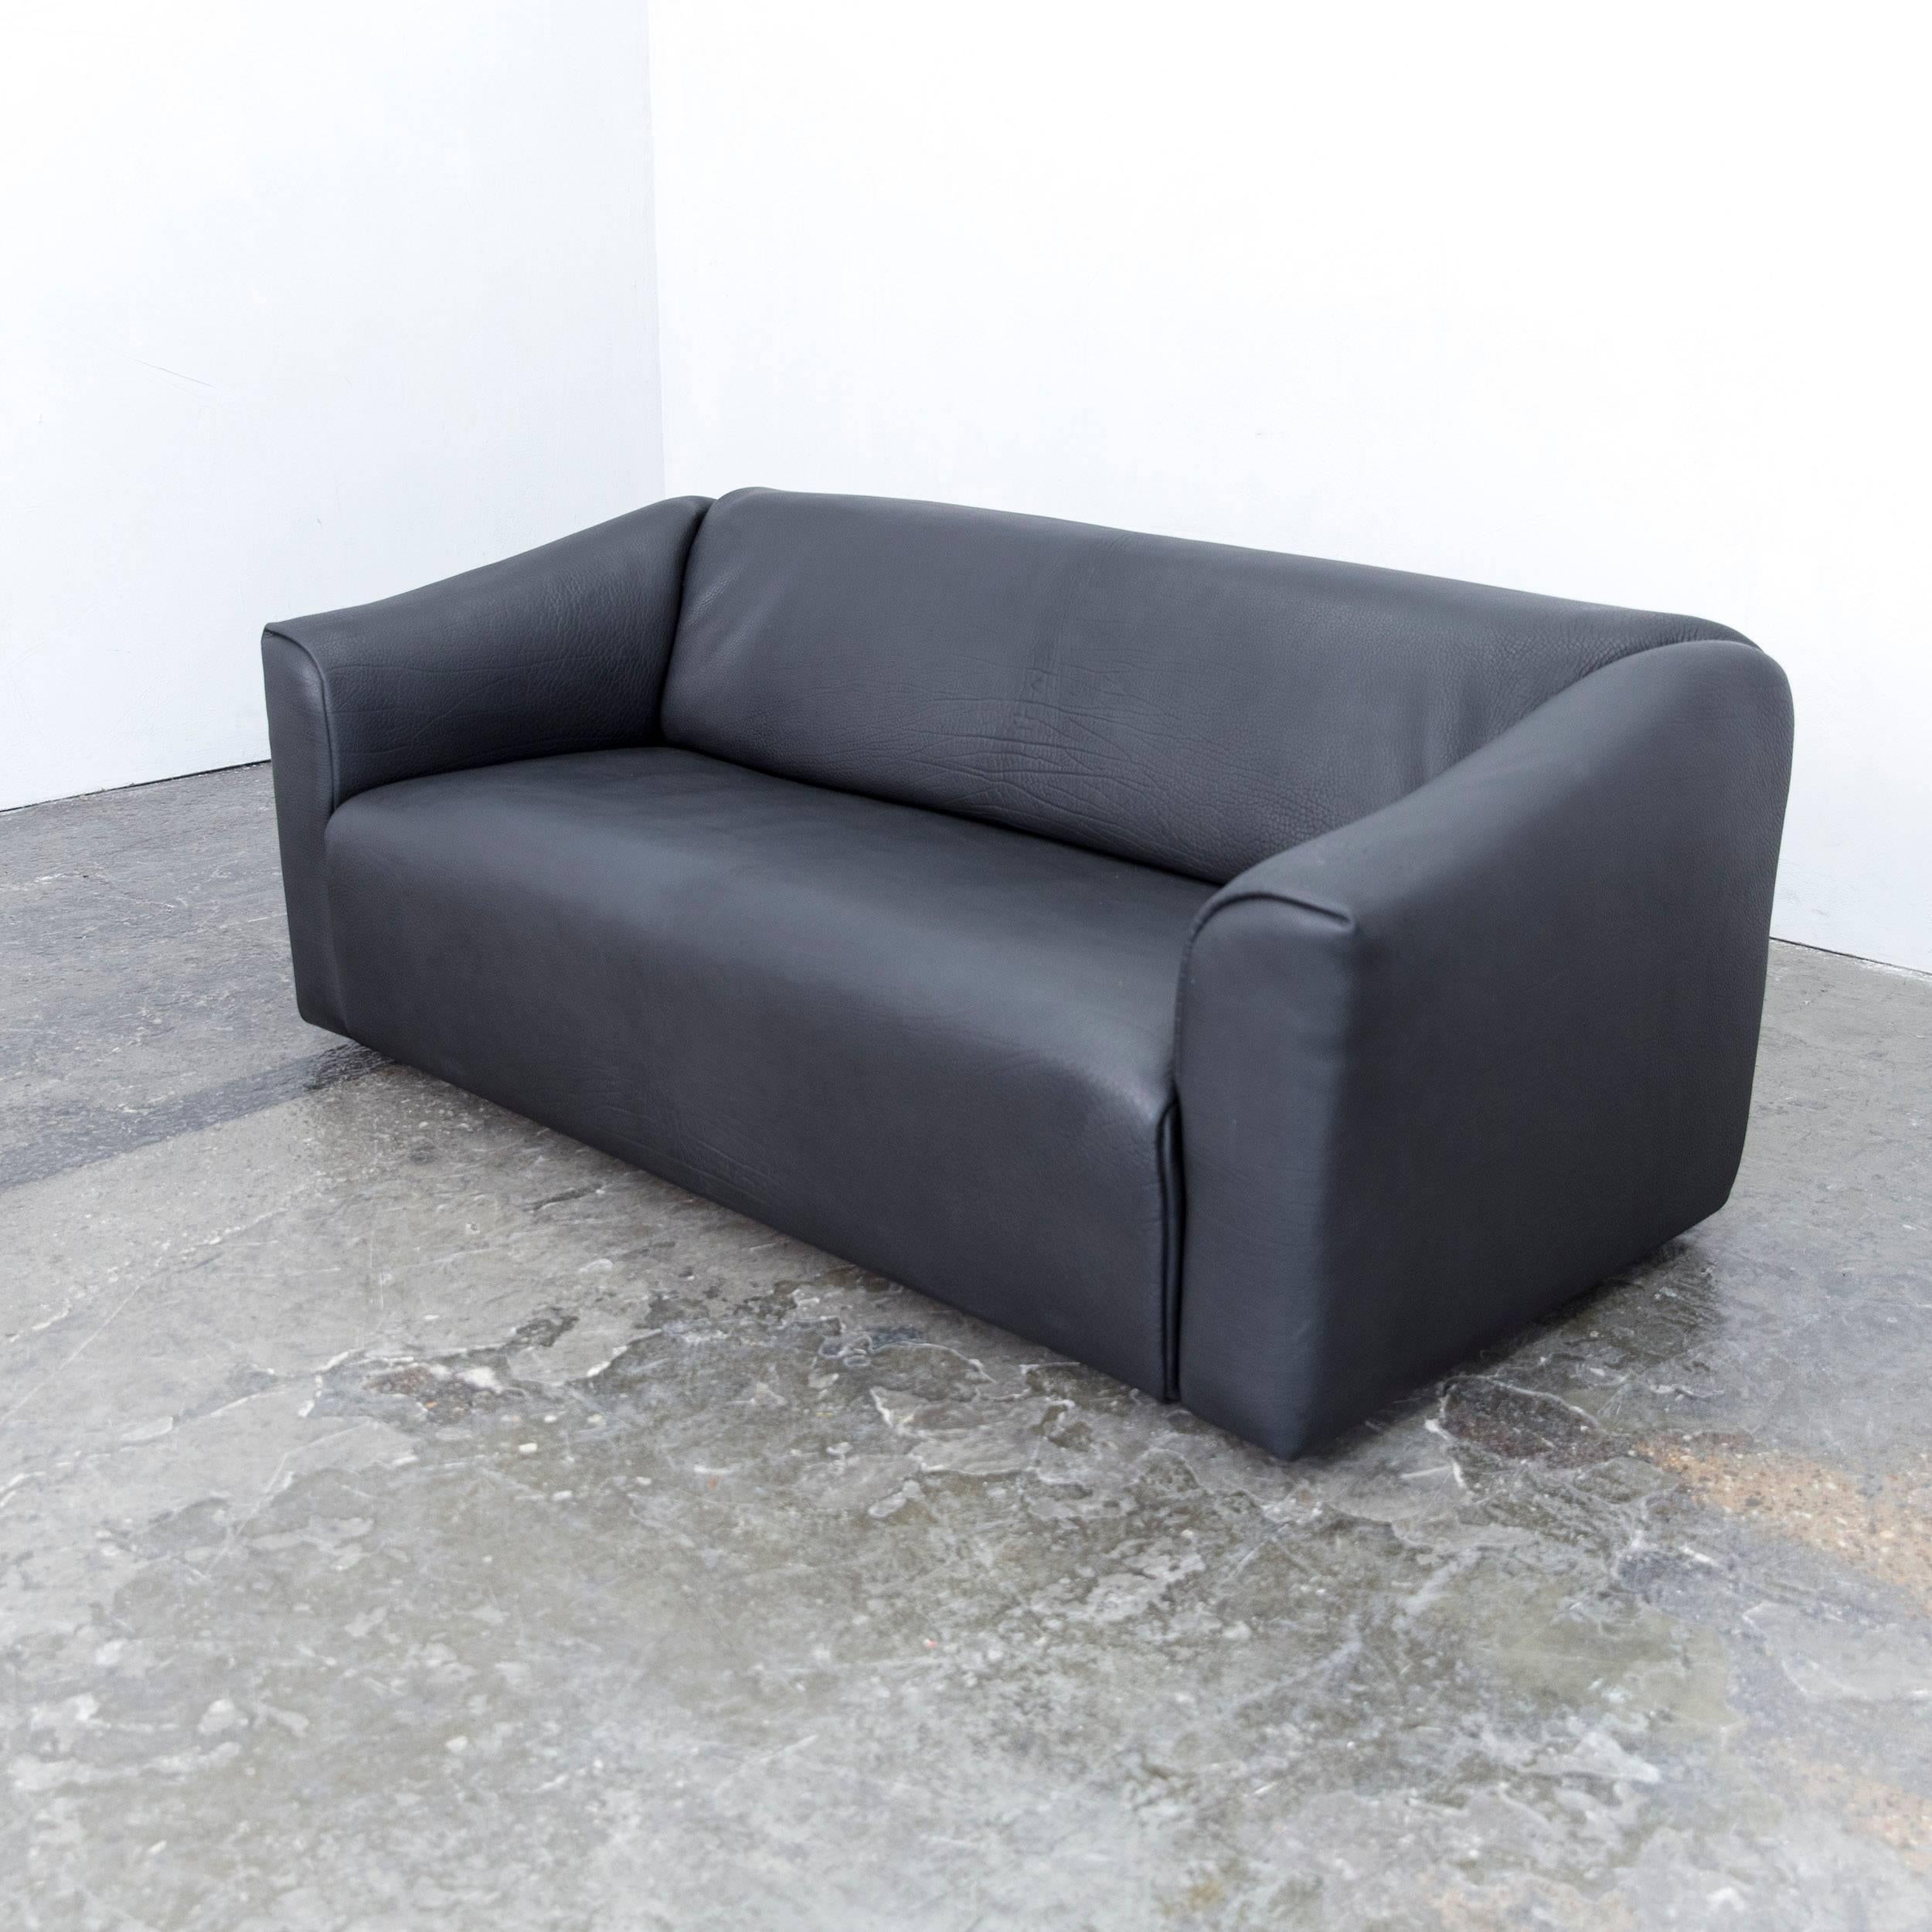 Swiss De Sede DS 47 Designer Sofa Neckleather Black Three-Seat Function Couch Modern